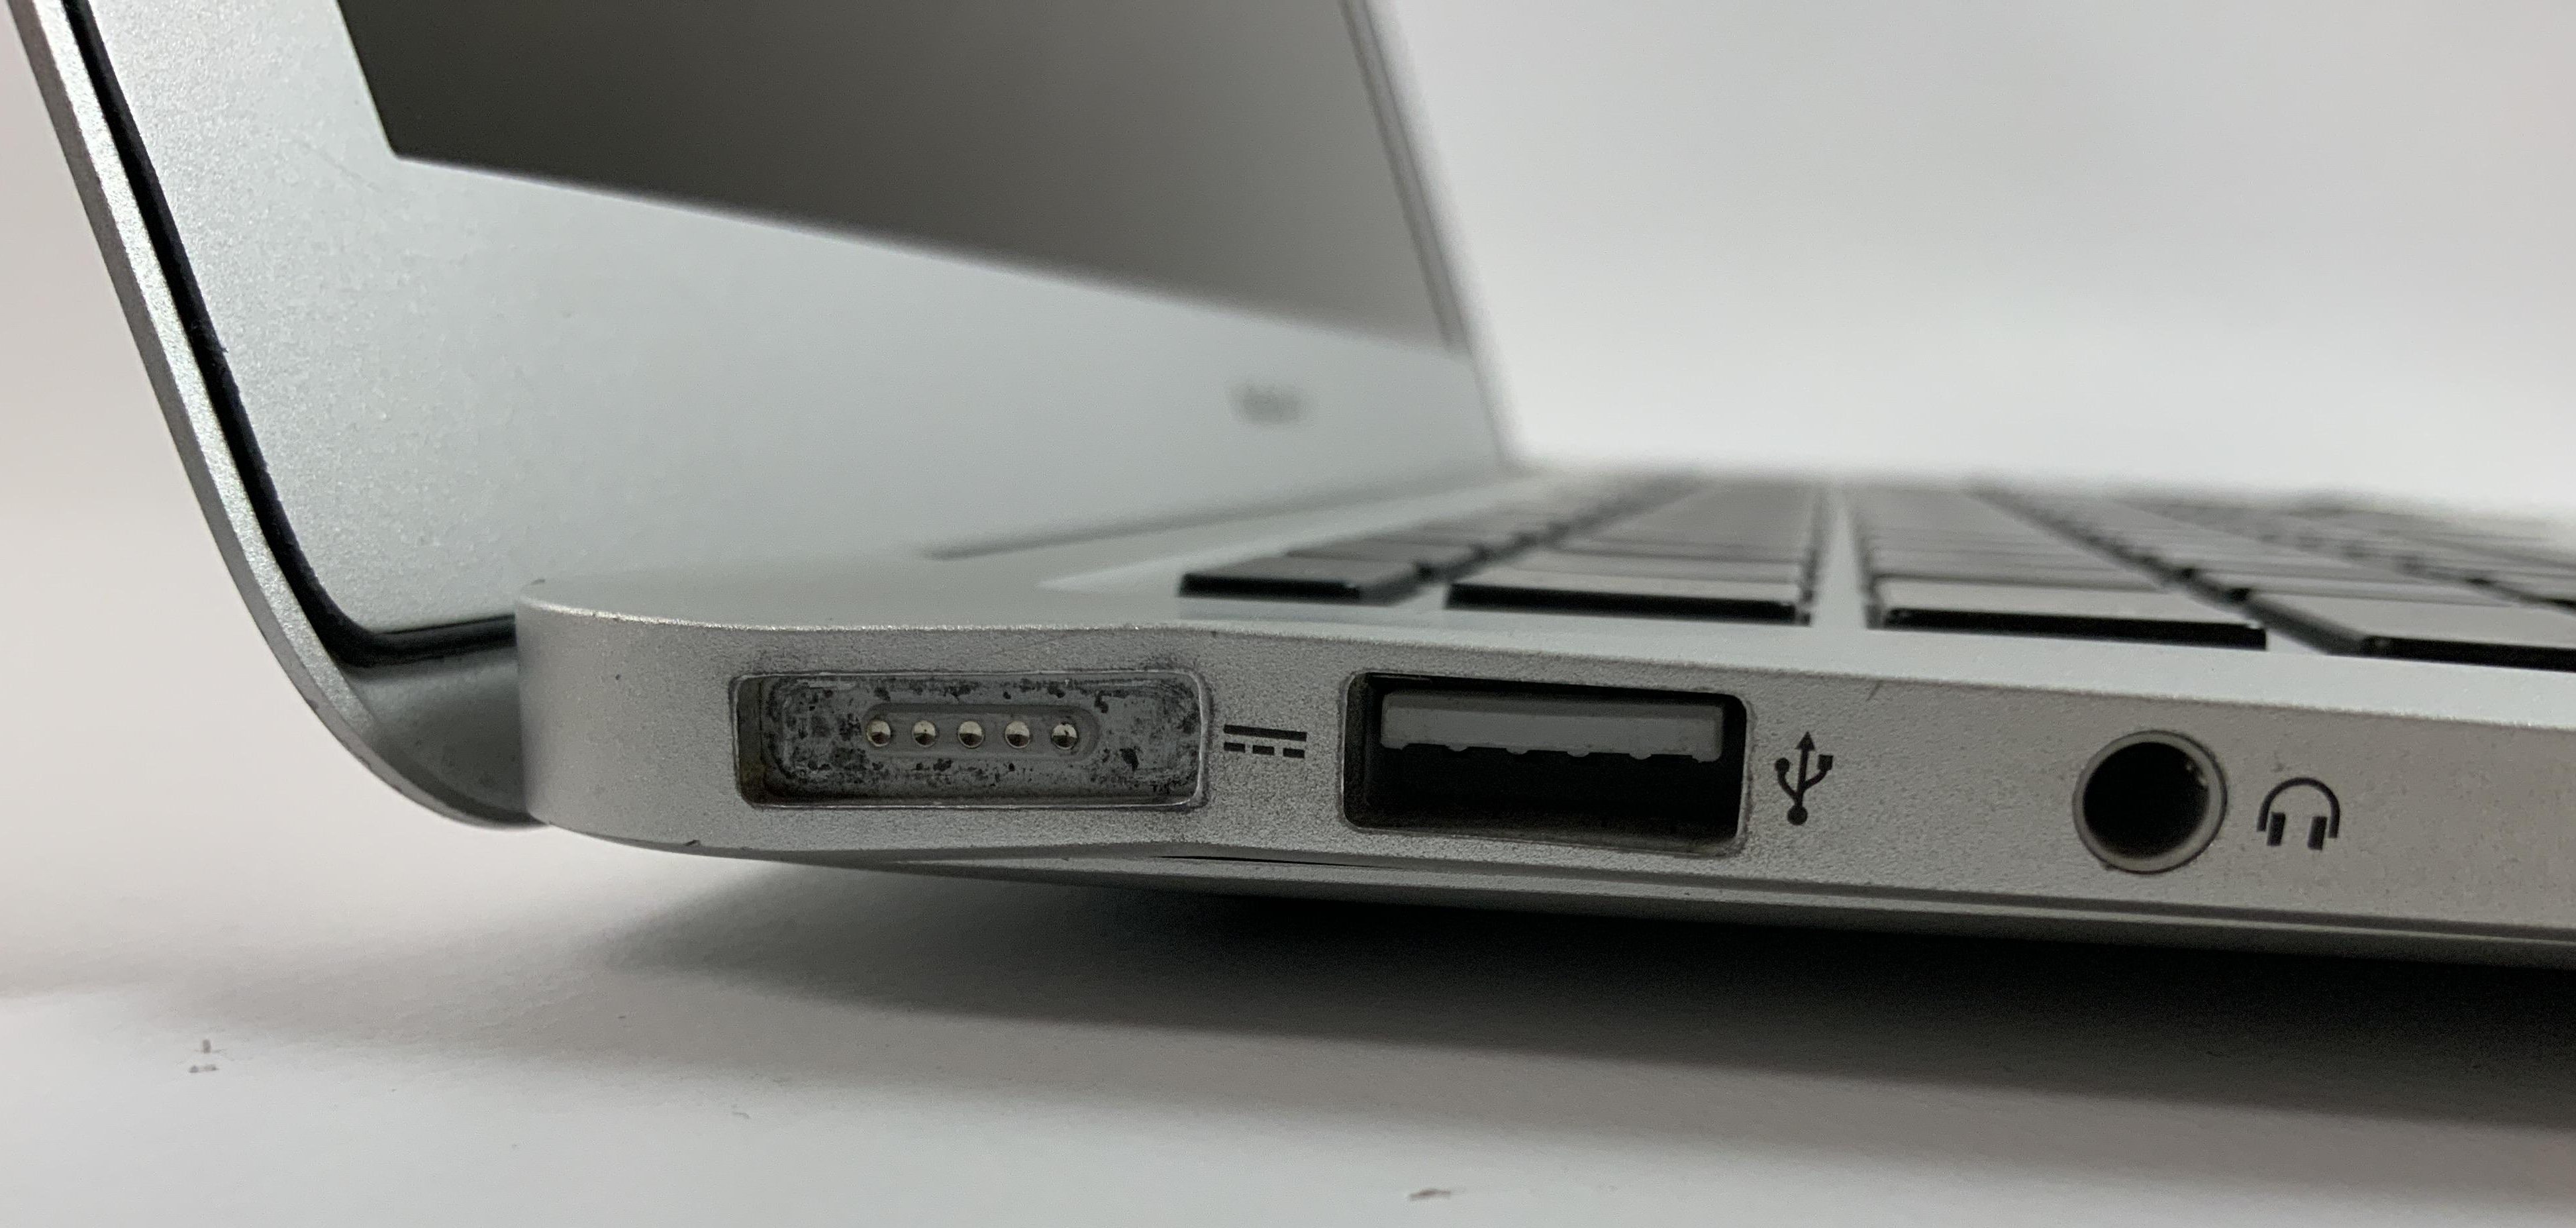 MacBook Air 13" Early 2015 (Intel Core i5 1.6 GHz 4 GB RAM 128 GB SSD), Intel Core i5 1.6 GHz, 4 GB RAM, 128 GB SSD, Afbeelding 2